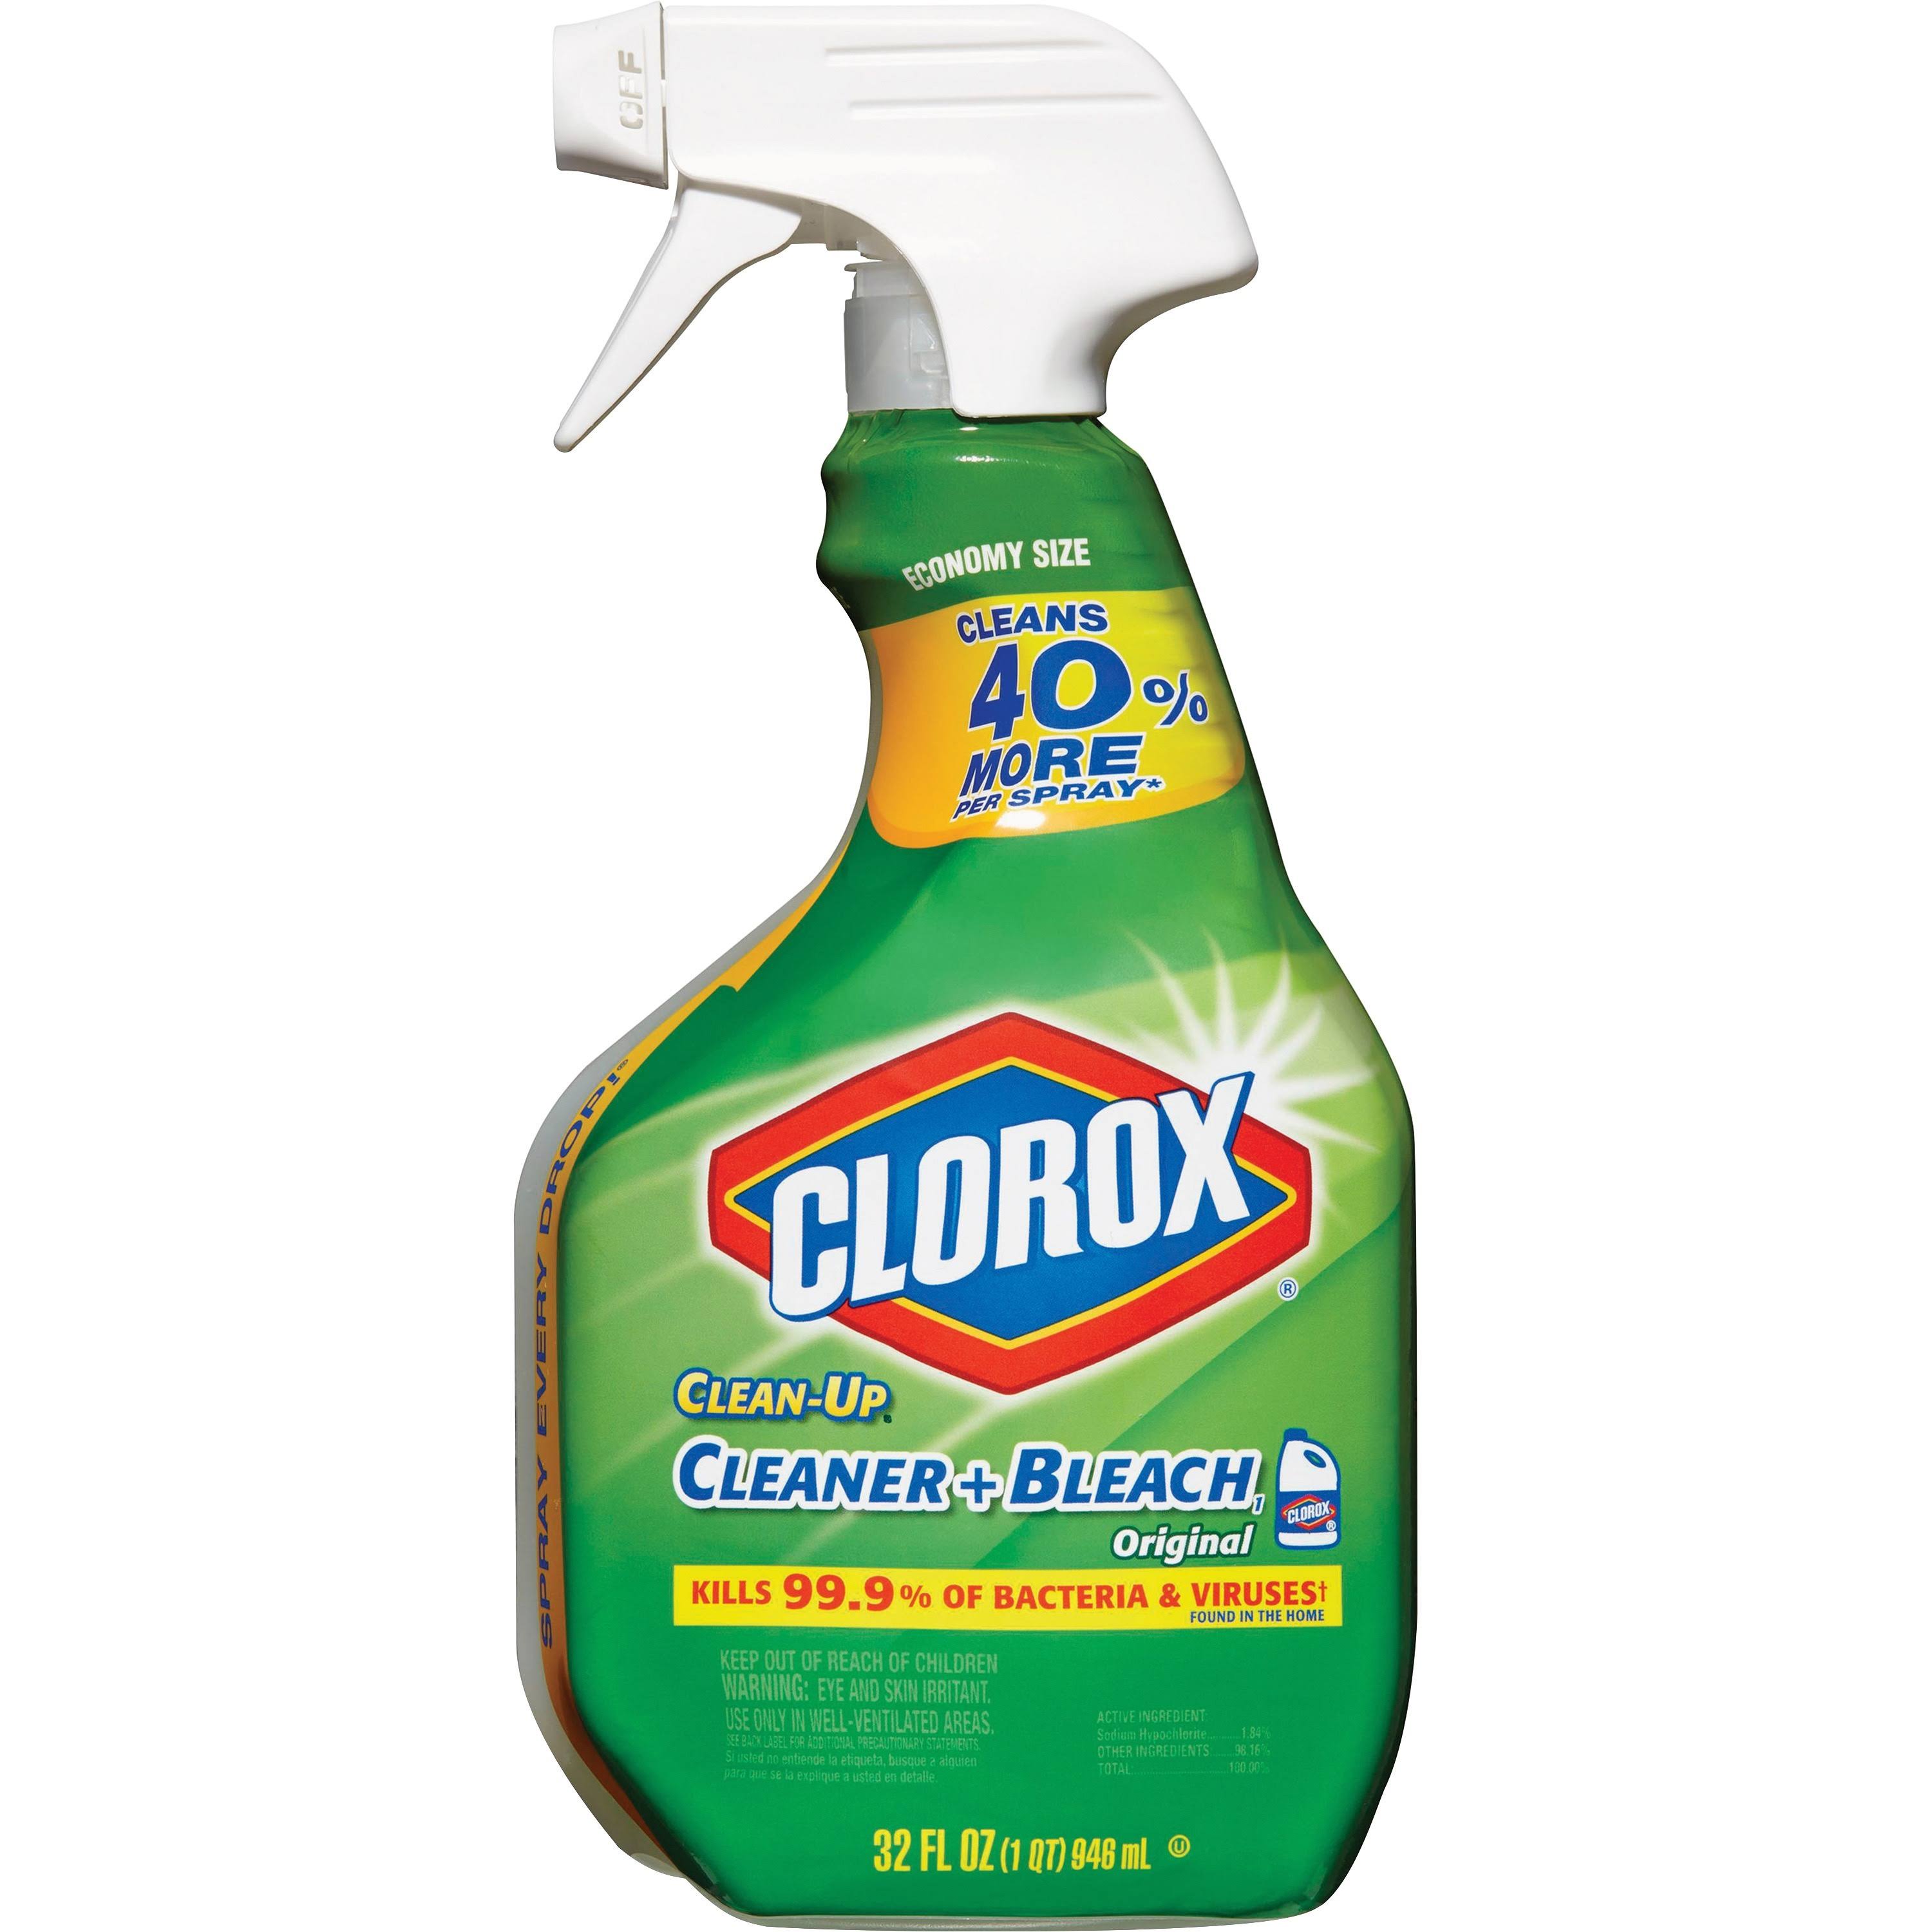 Clorox Clean-Up Original Cleaner with Bleach Spray - 32oz